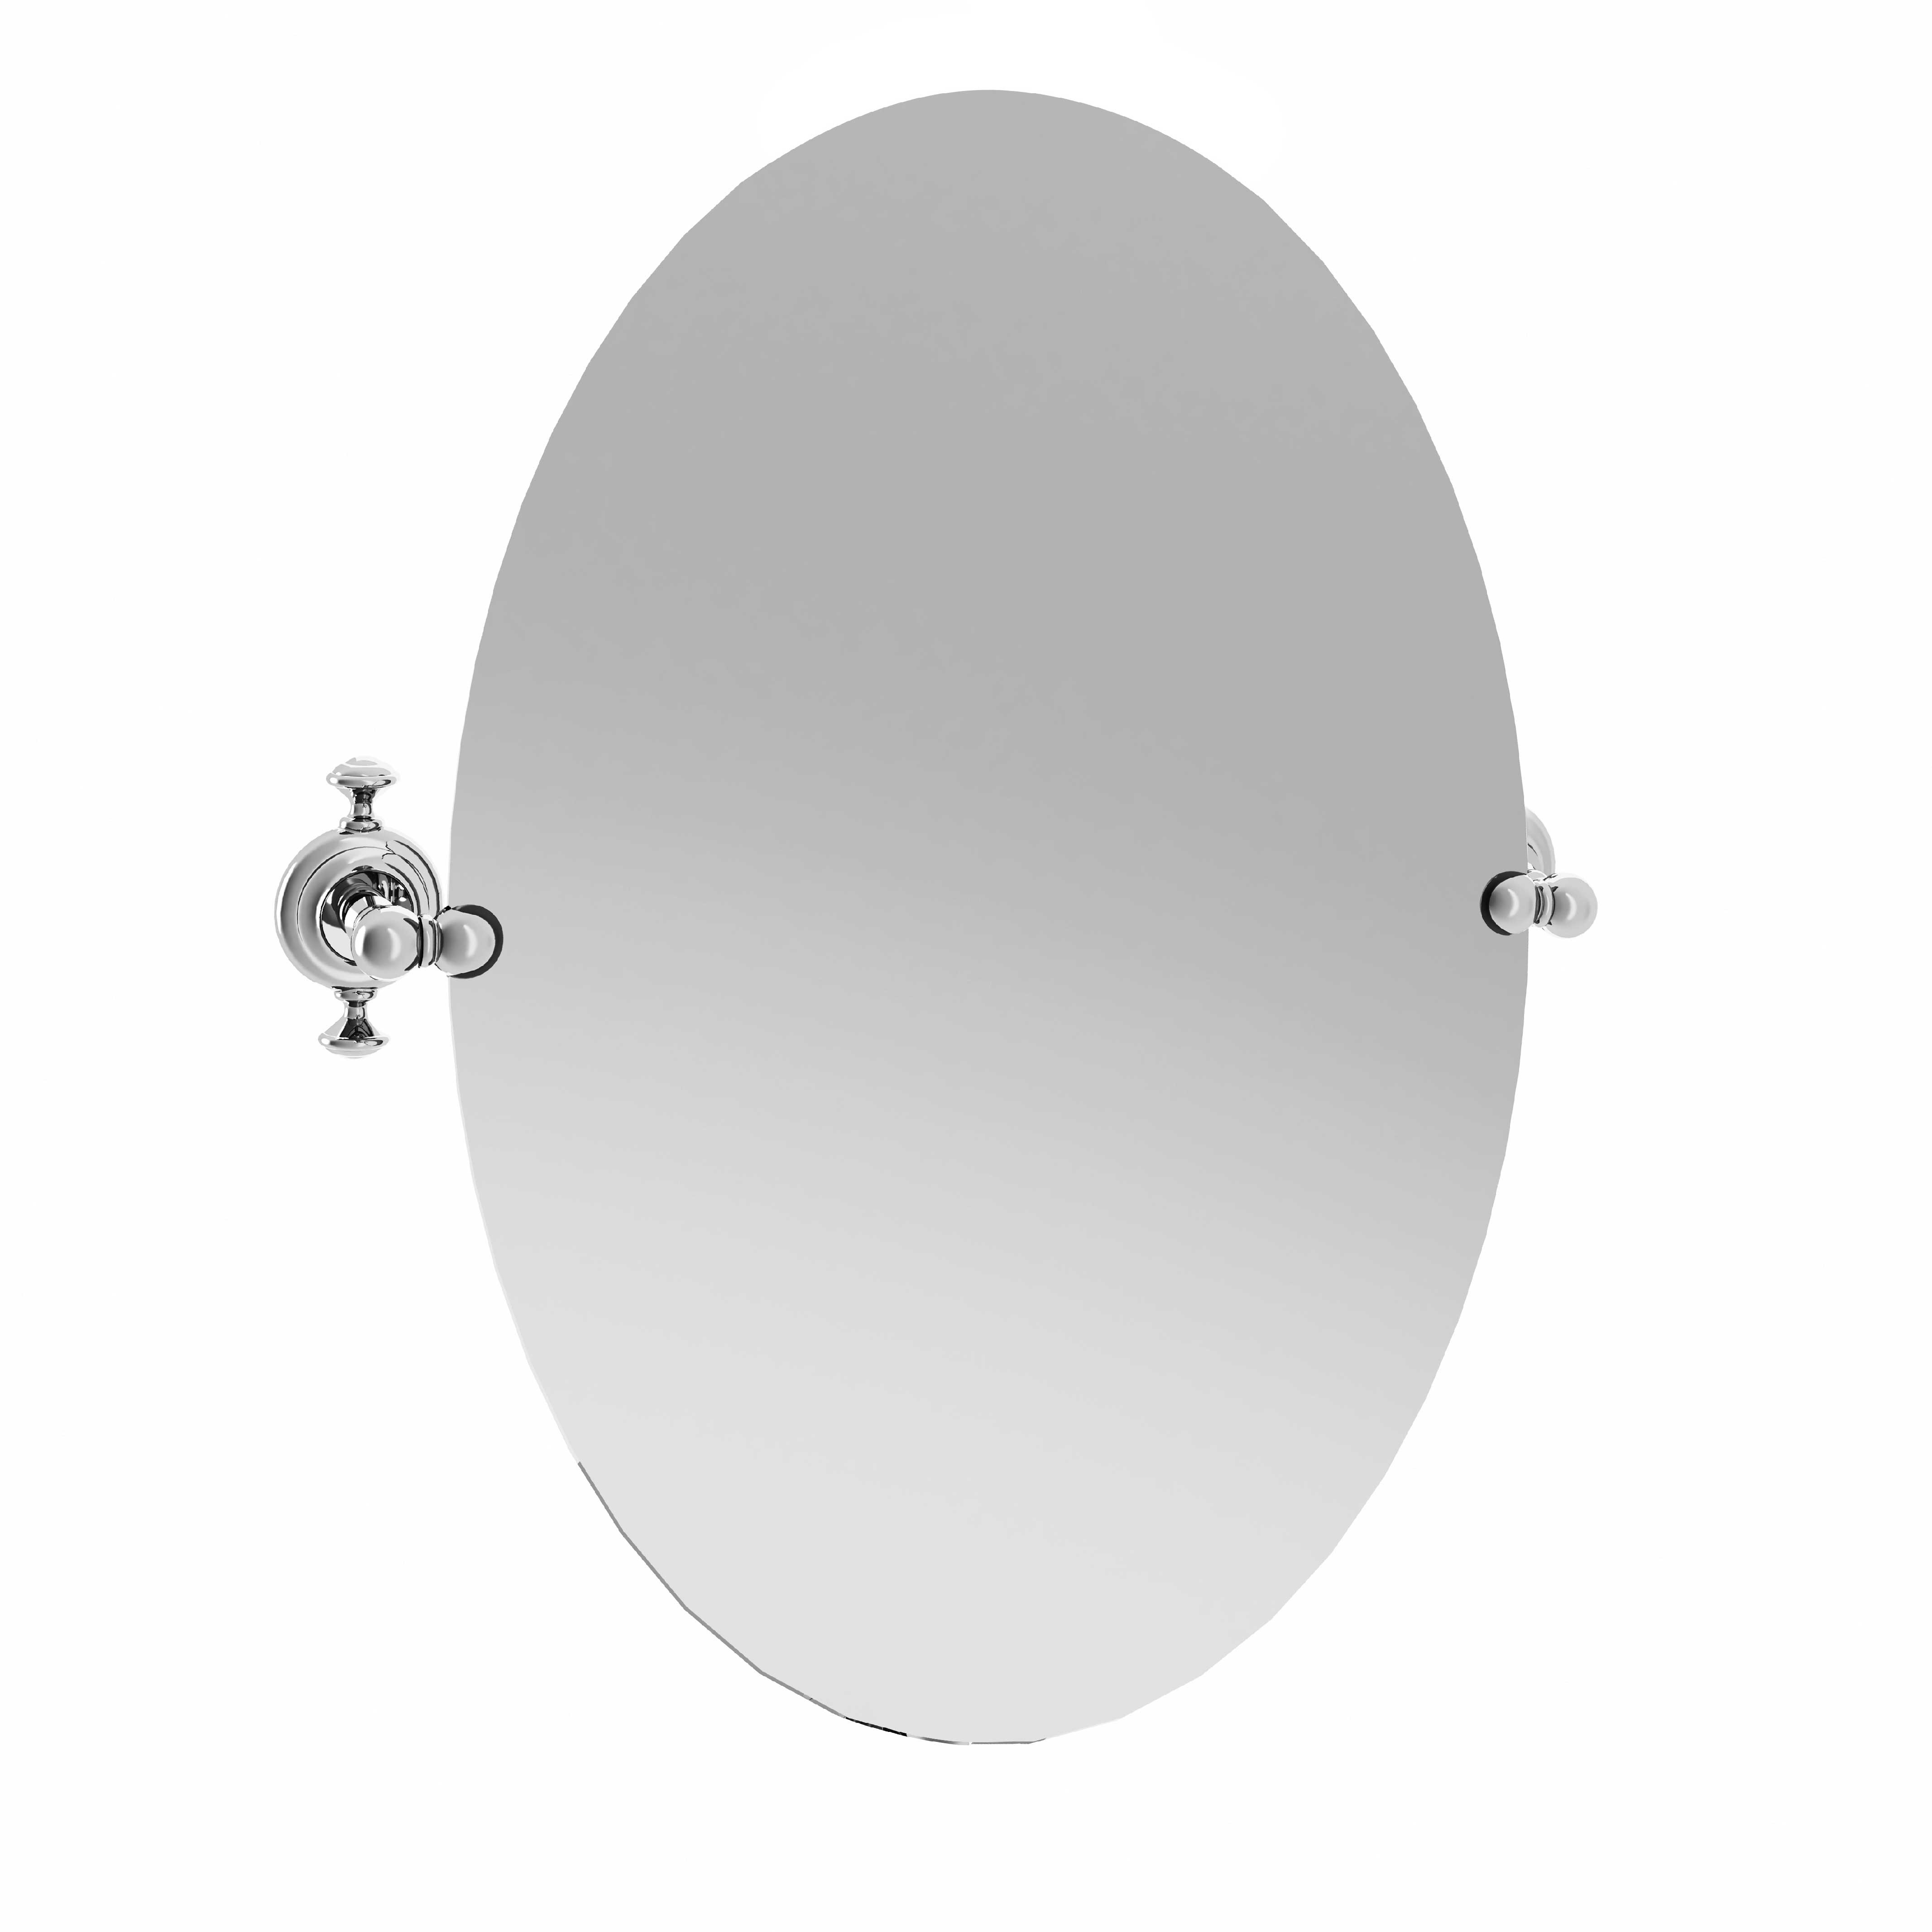 M01-537 Oval mirror